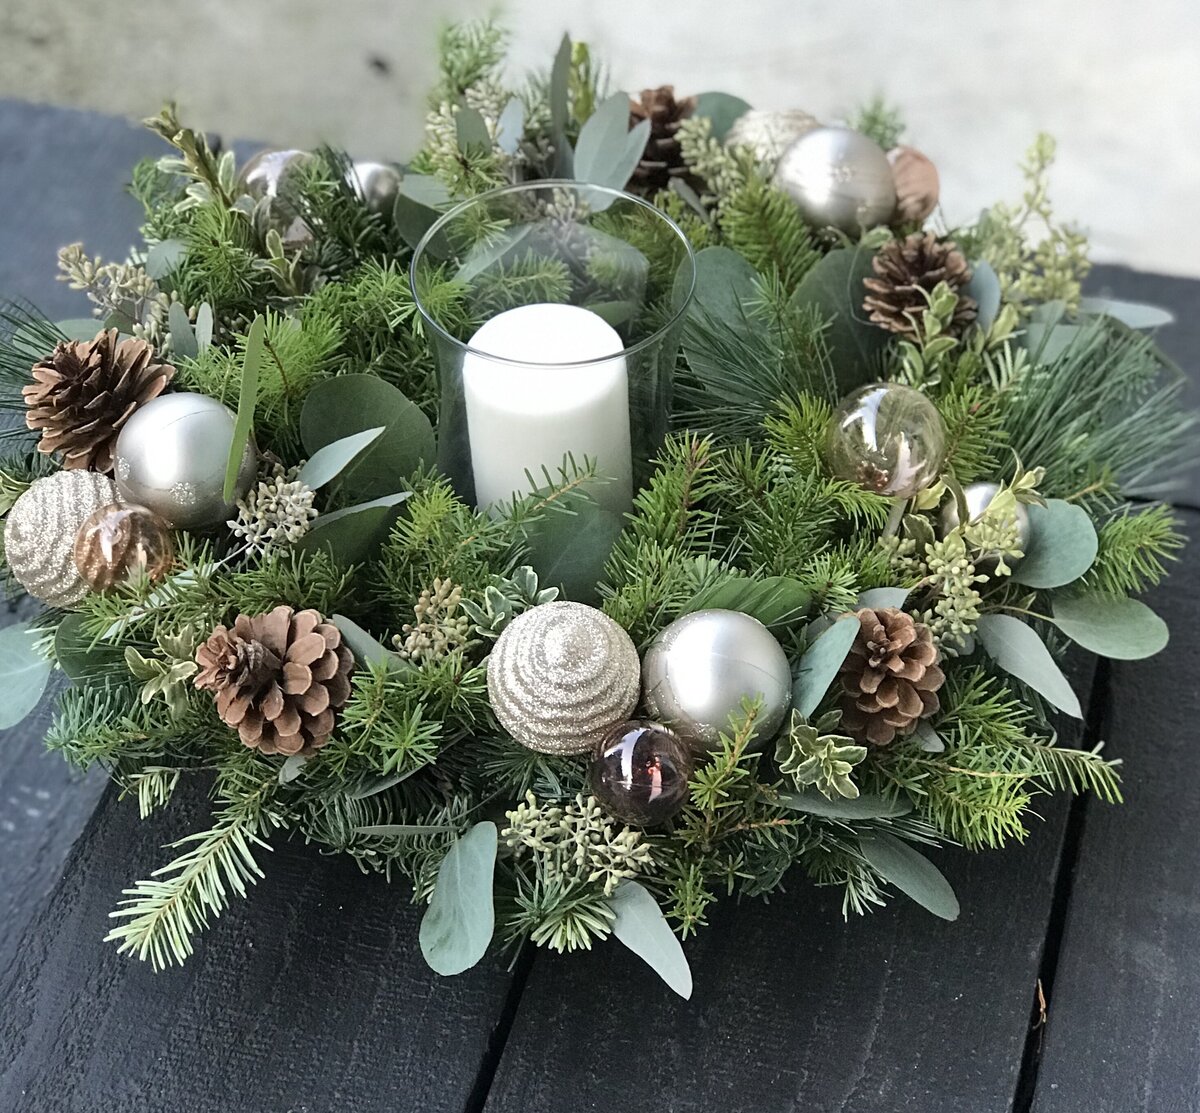 Hurricane vase evergreen wreath 2019